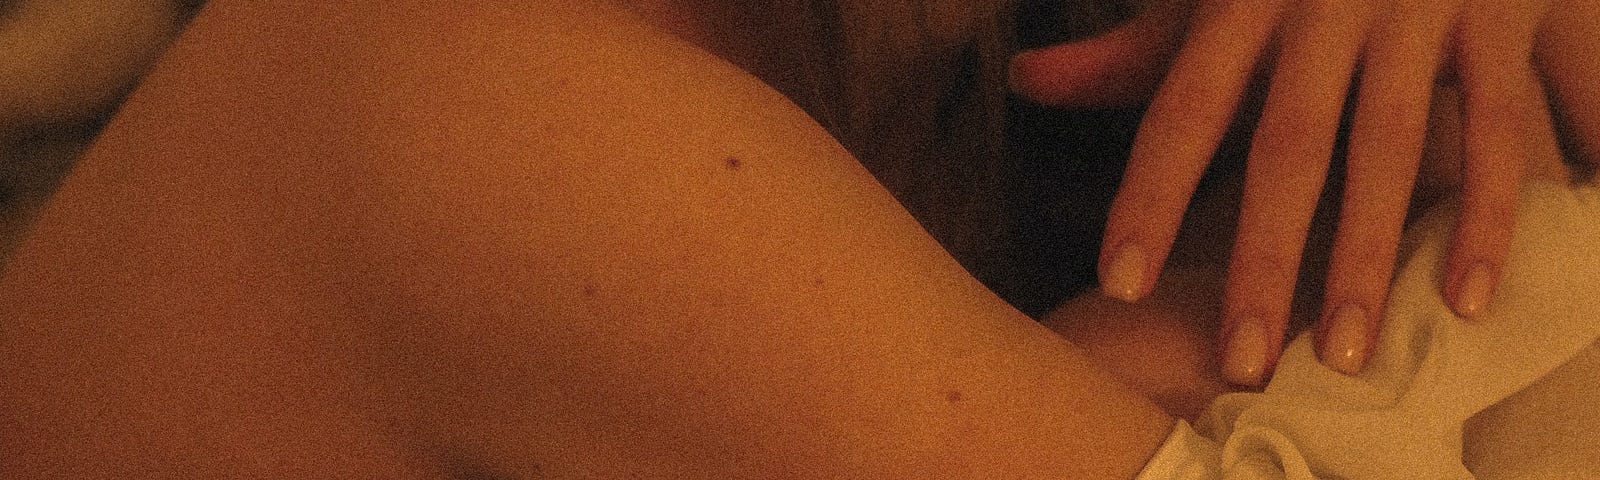 A feminine woman’s skin. Sleeve down showing her shoulder blade.